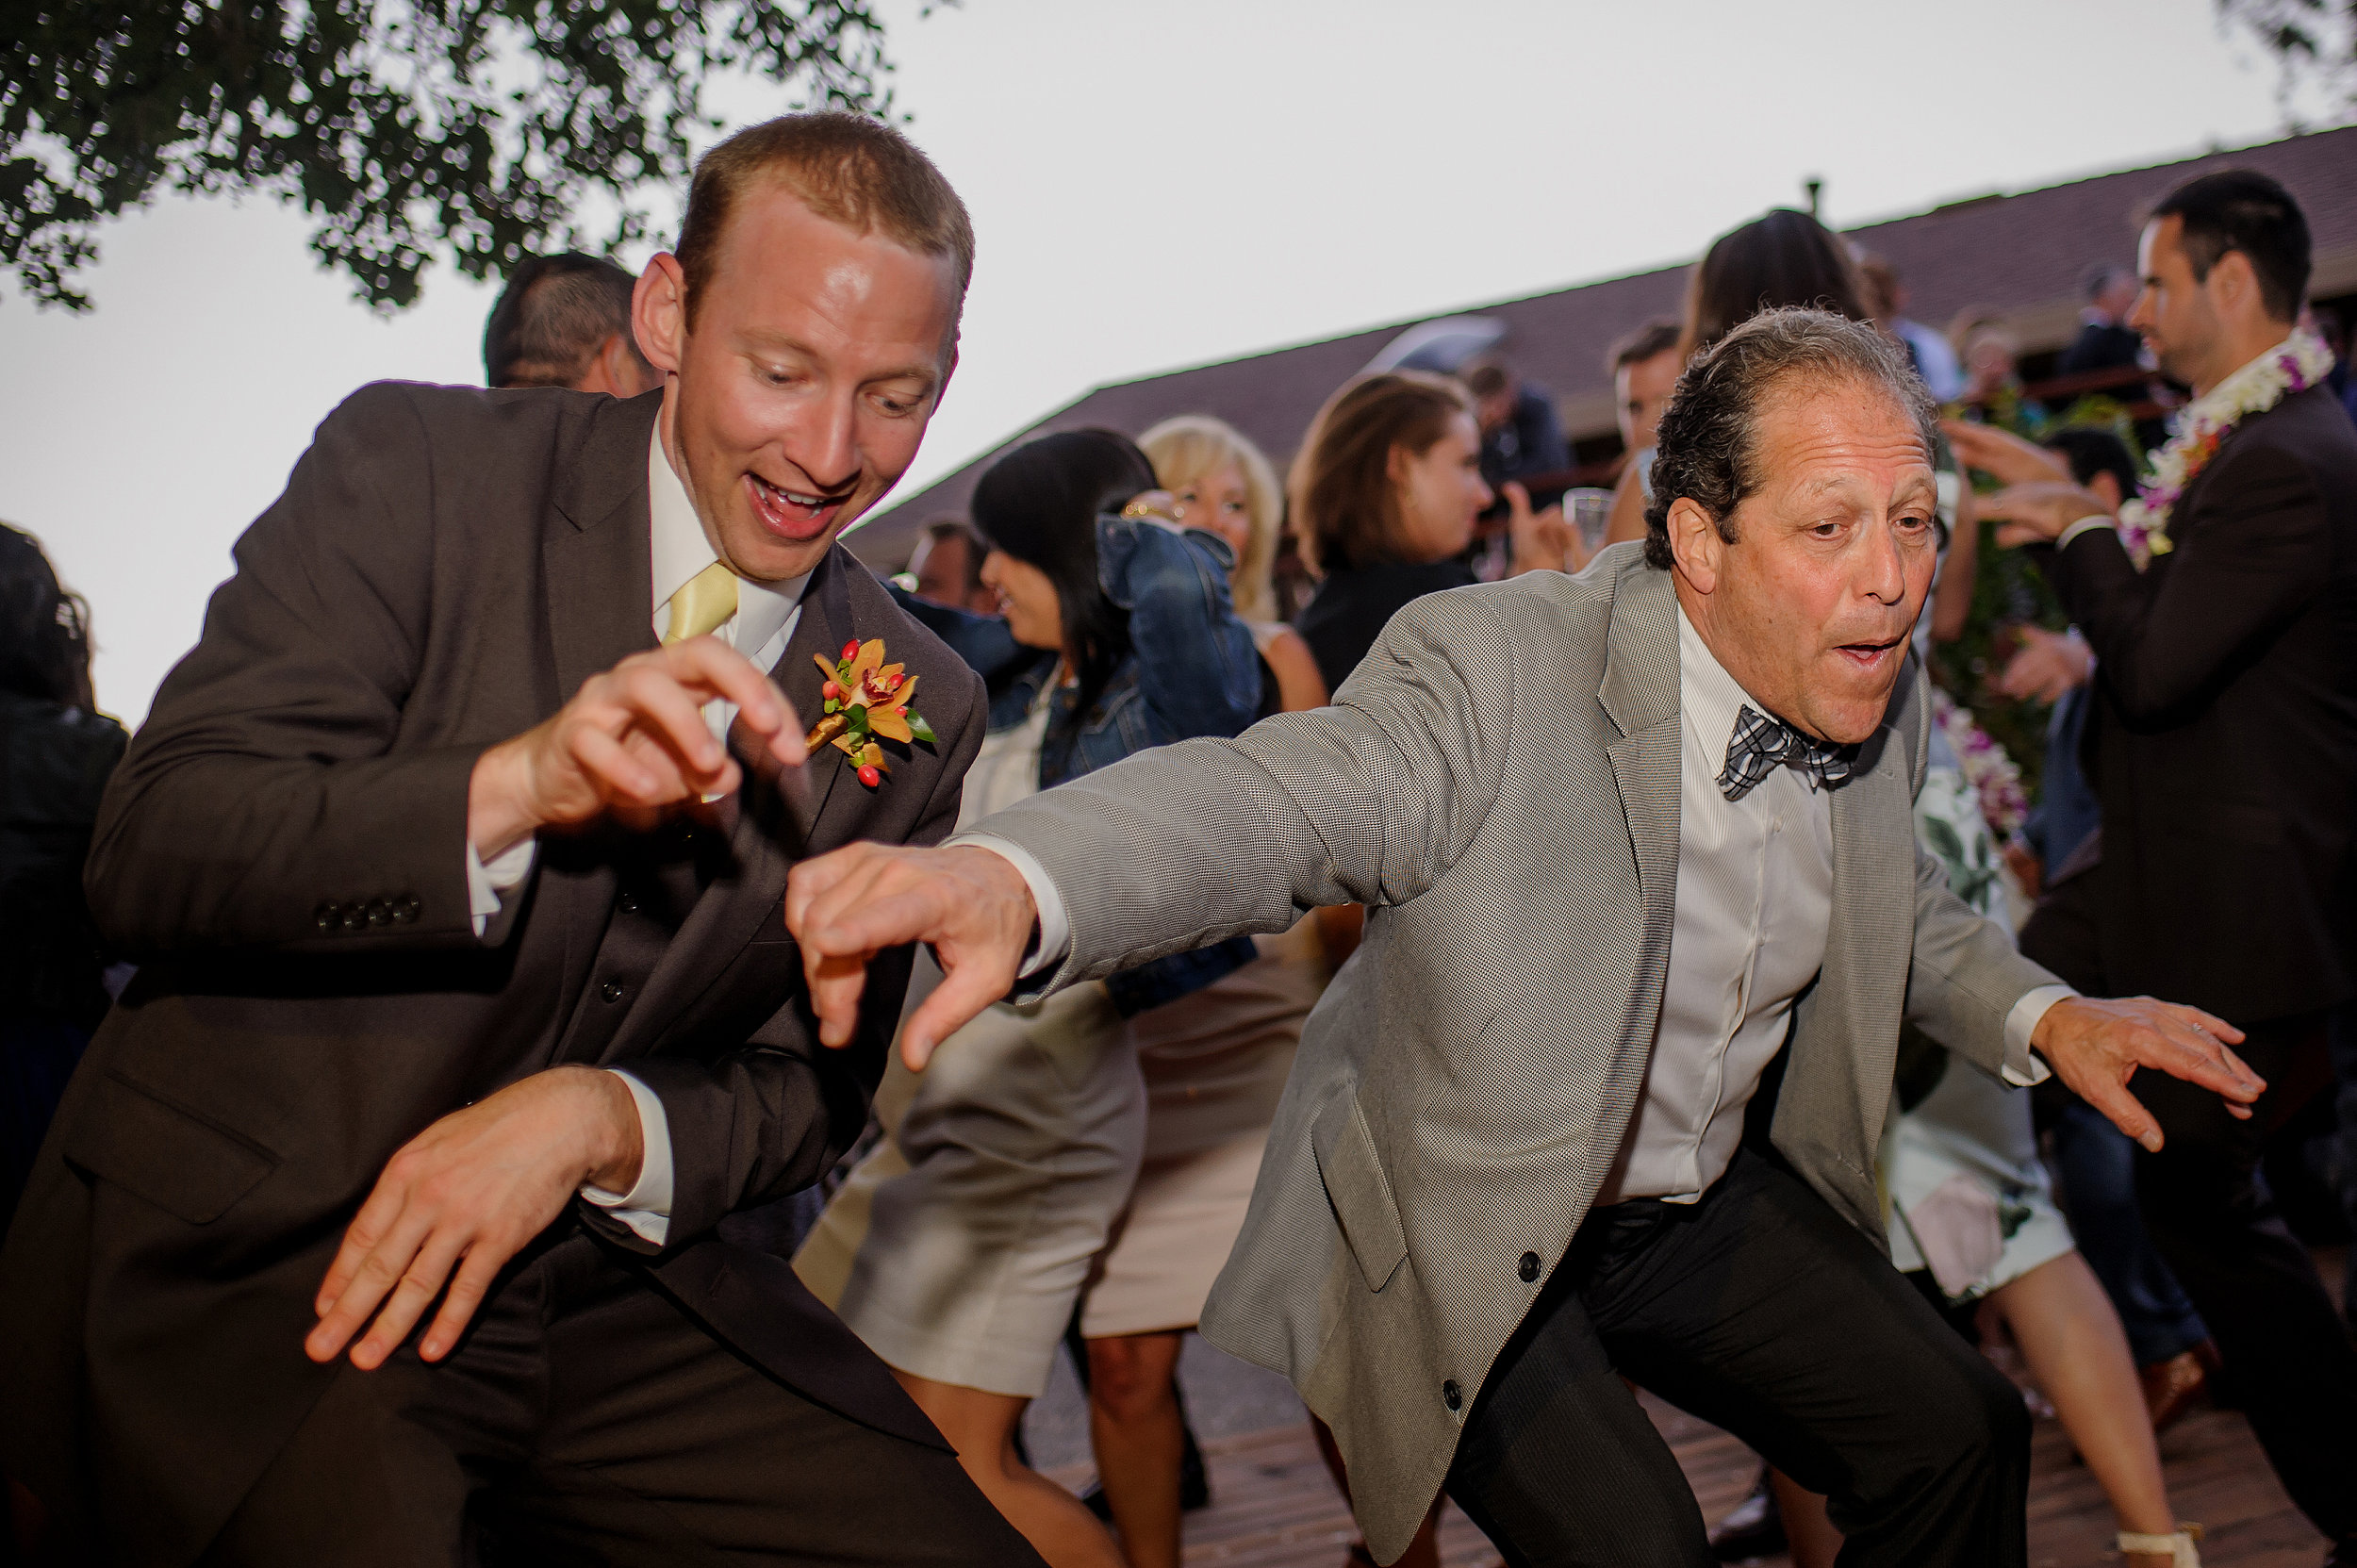  Dancing during reception of backyard wedding in Sonoma California.&nbsp; 